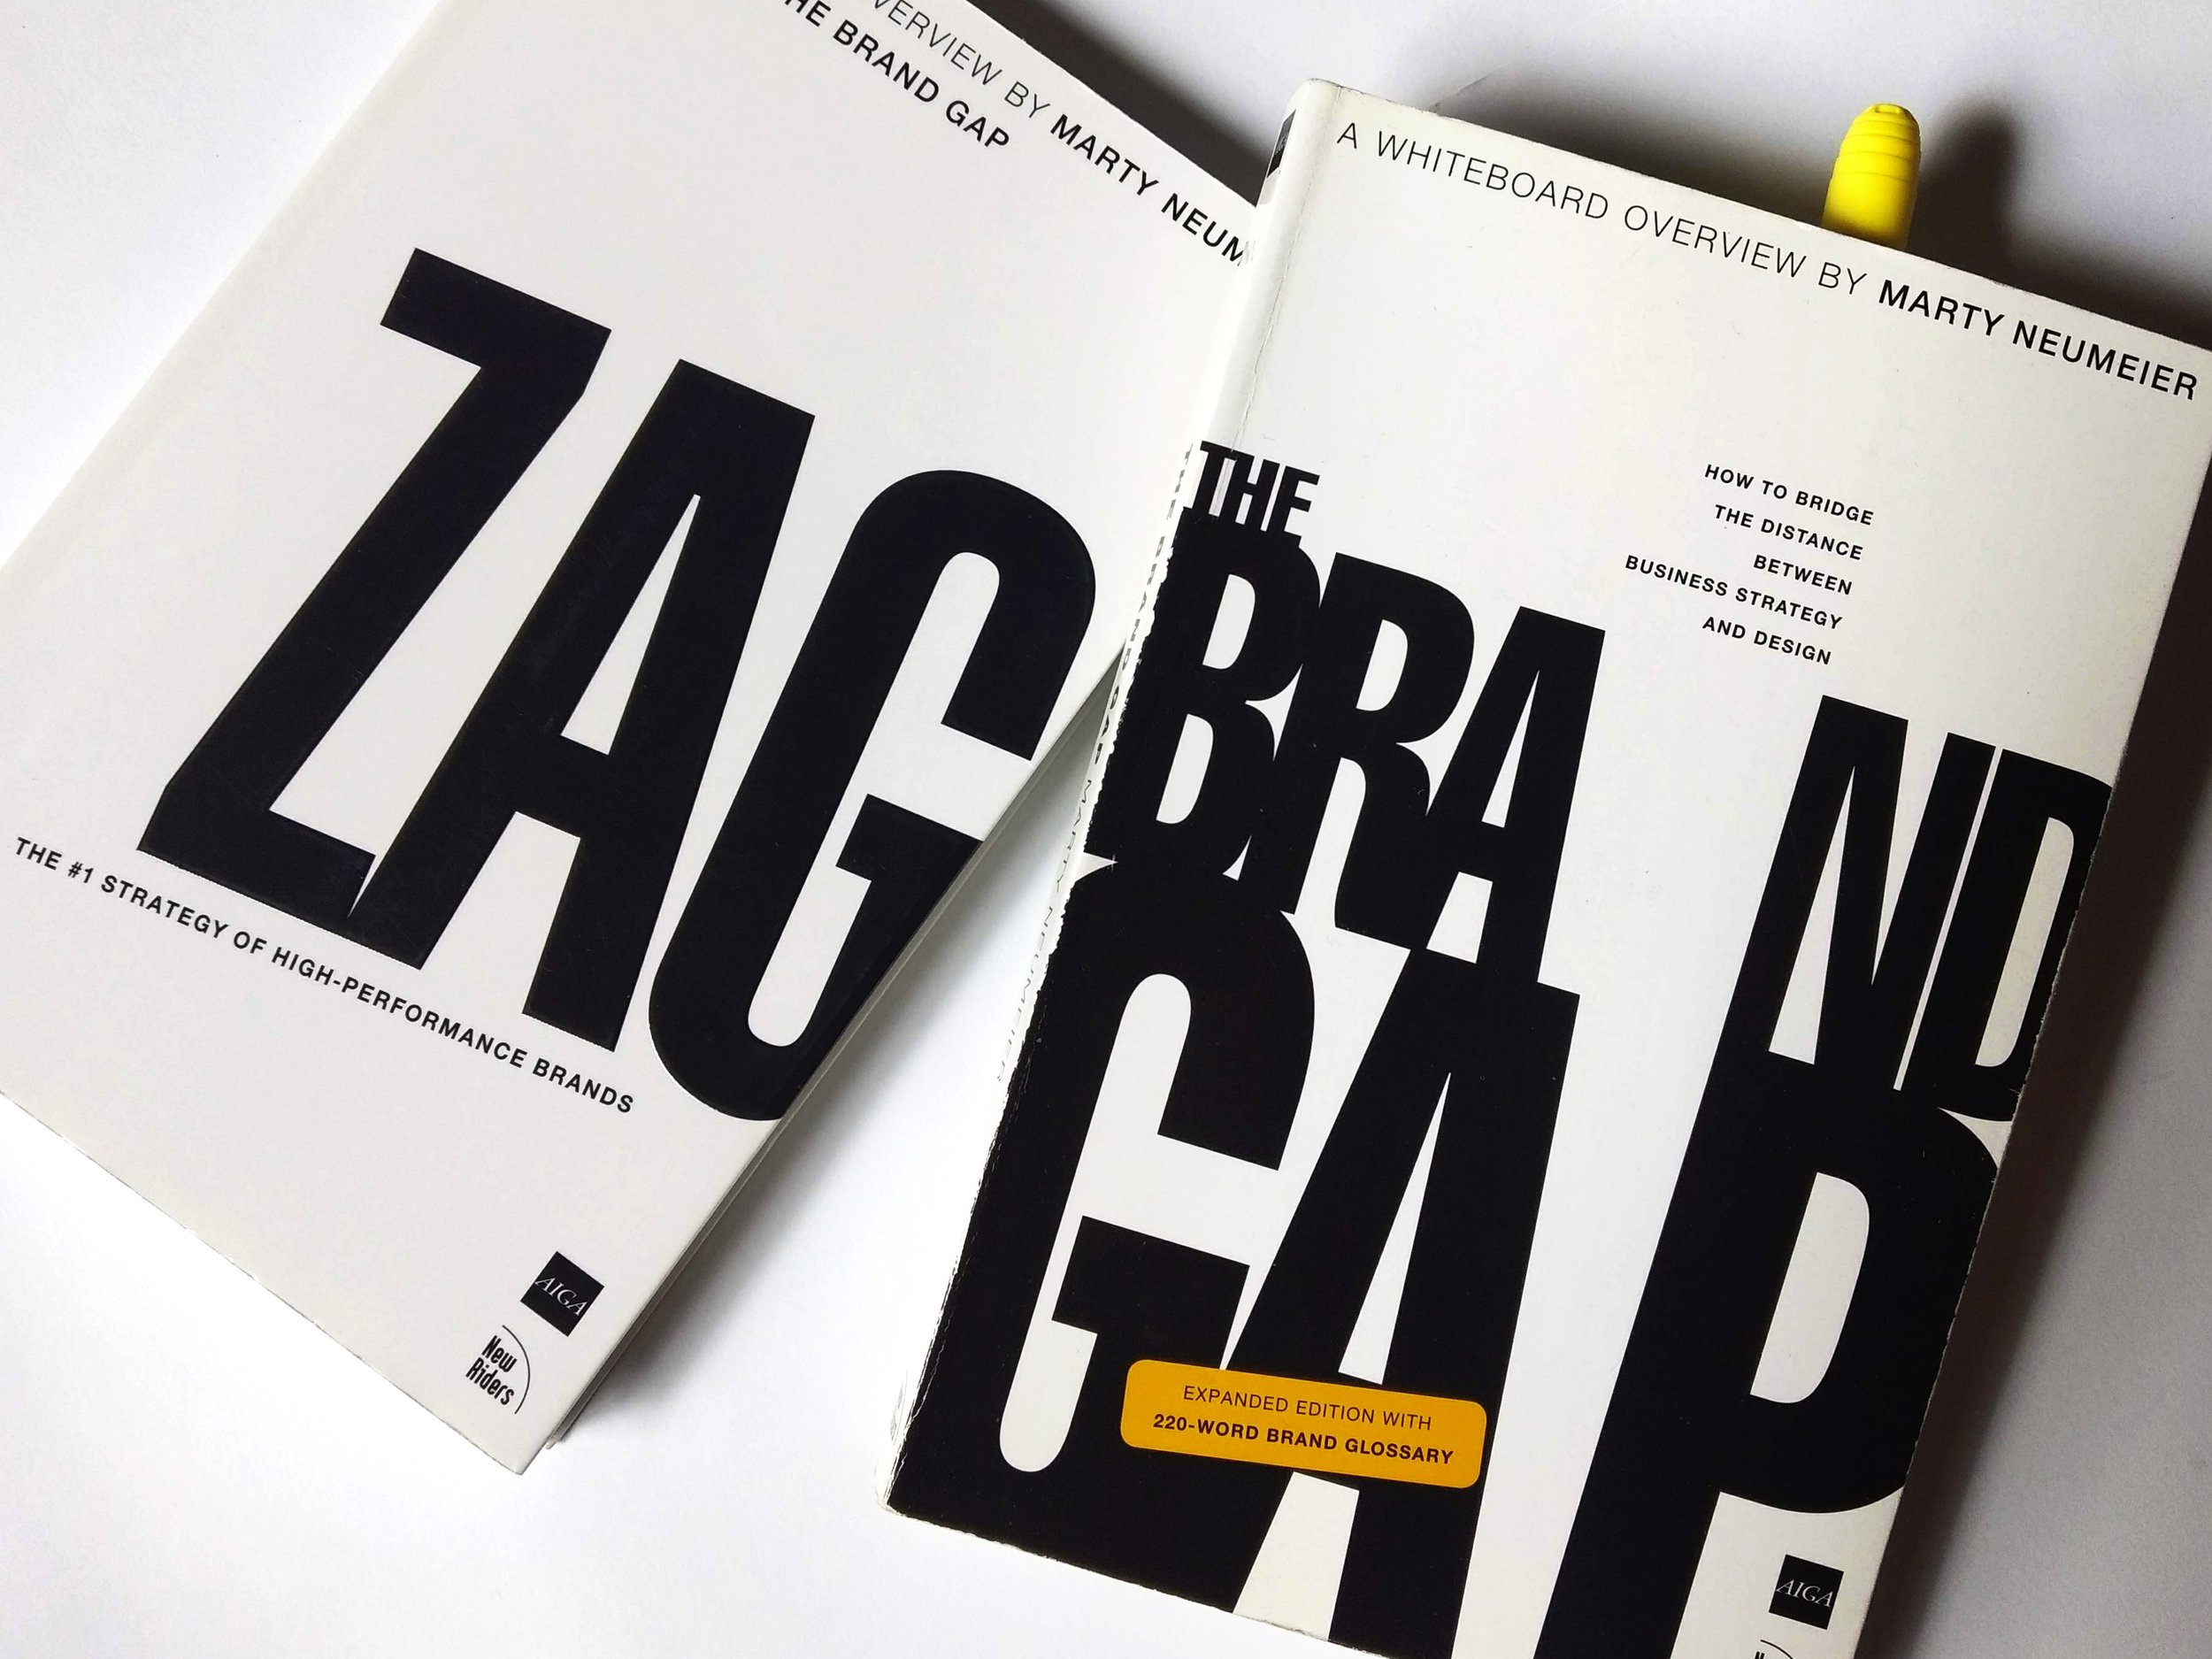 Brand_Gap_Zag_book_covers.jpg